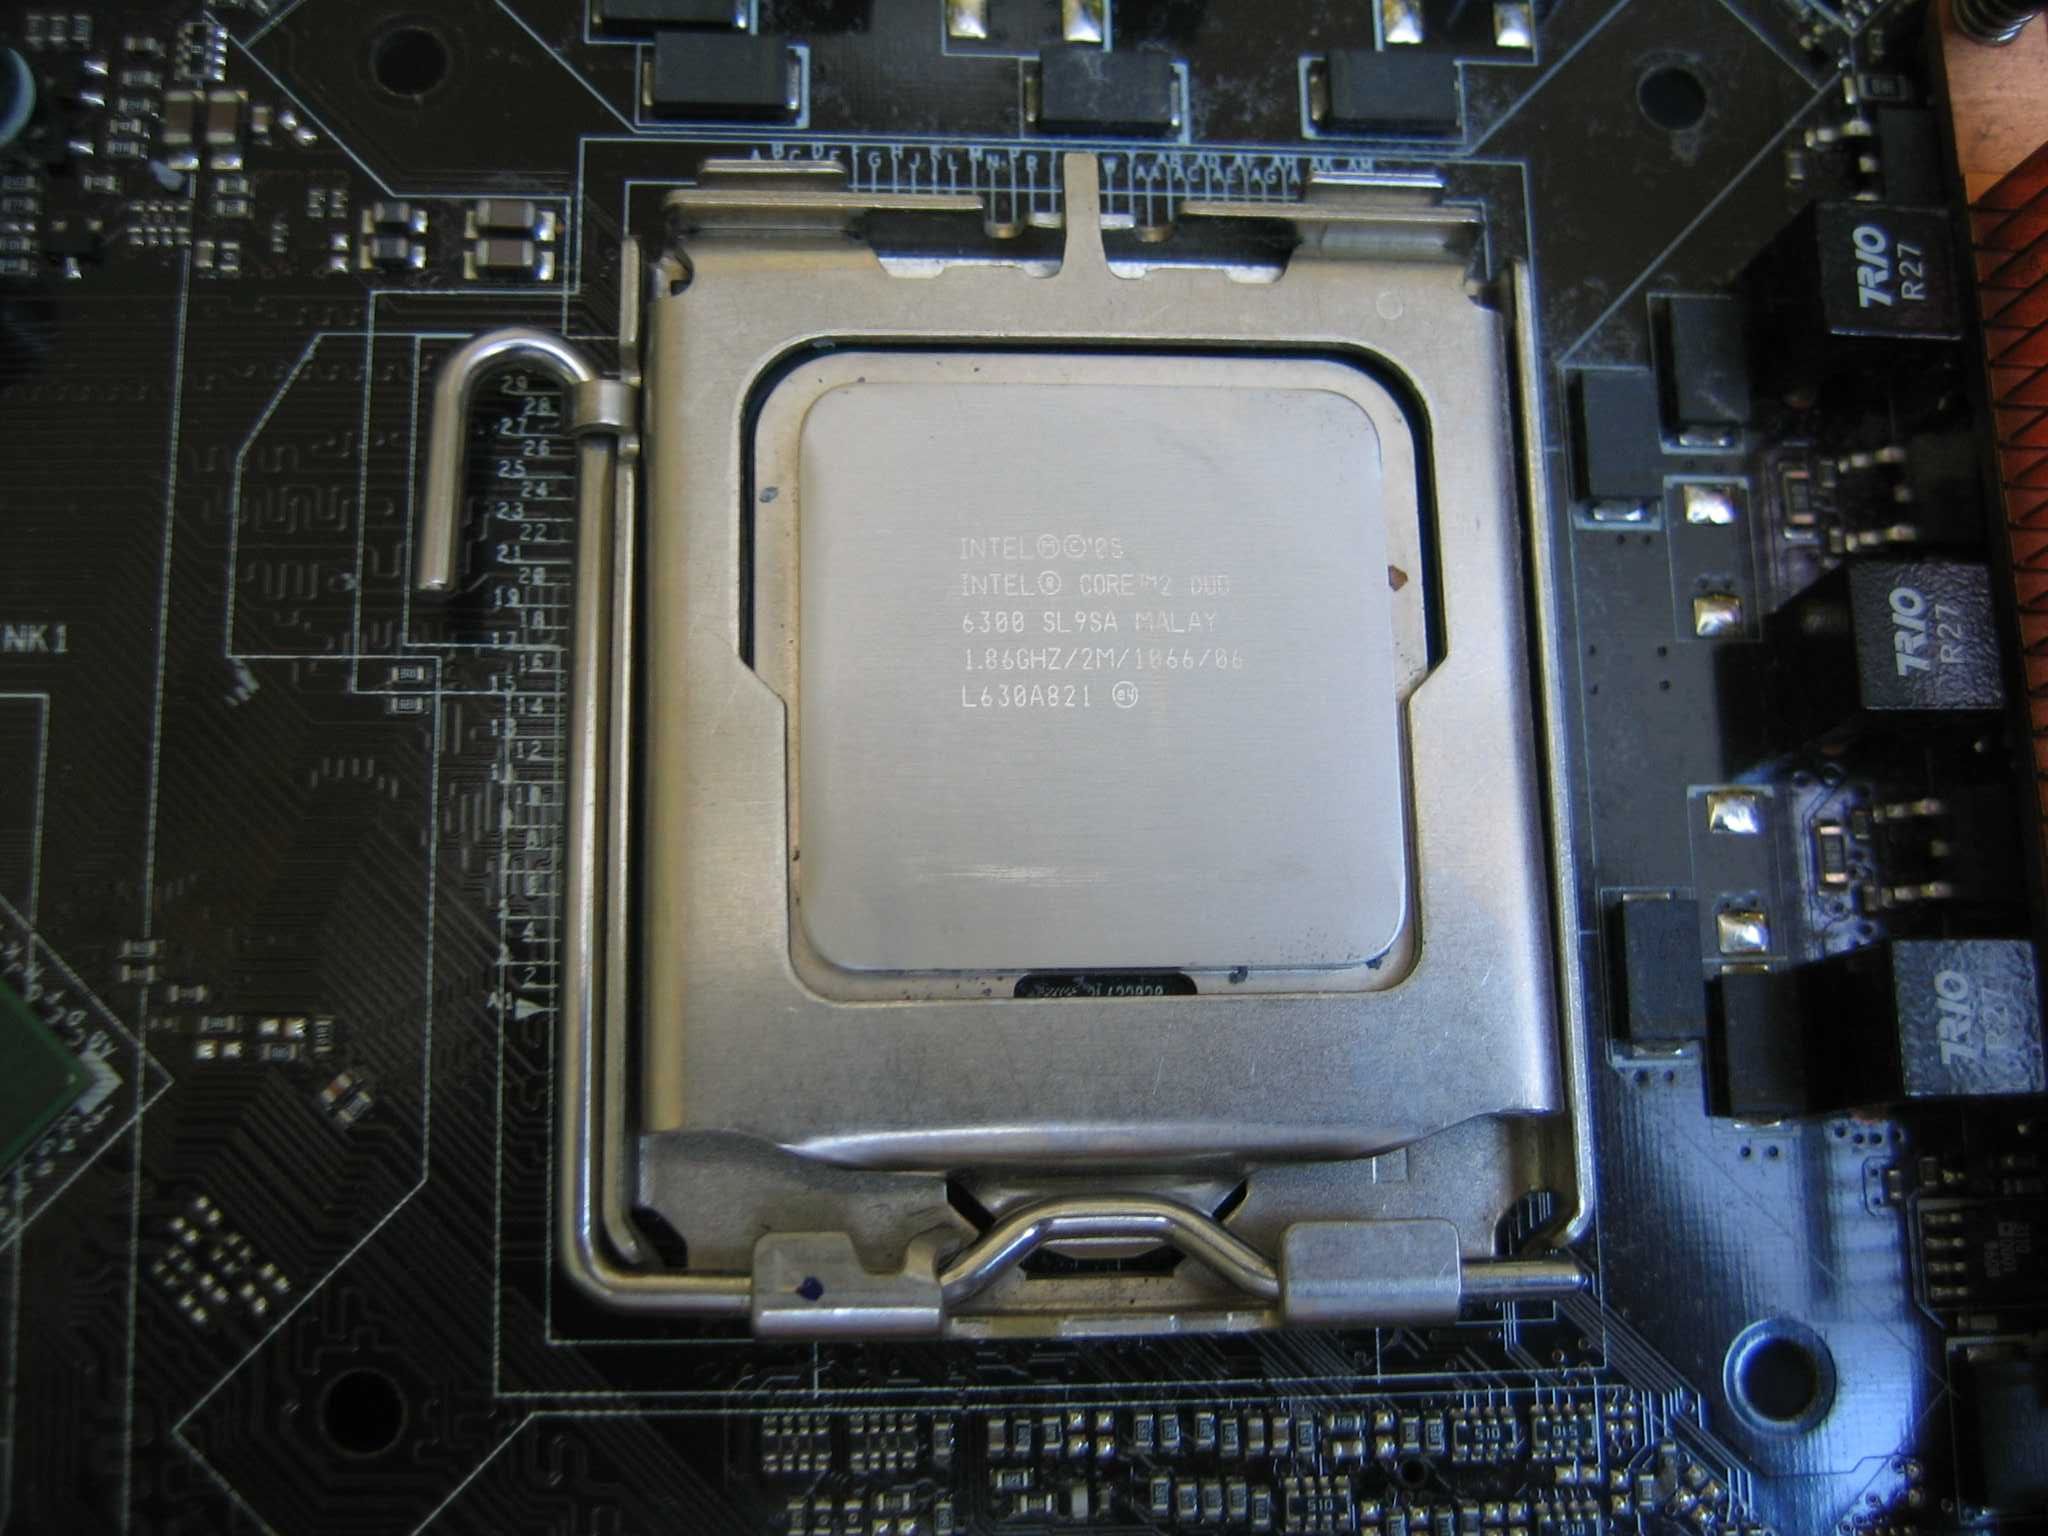 ZESTAW Intel C2D 1,83GHz 2Gb Asus P5N32-E GeForce 8400GS + gratisy